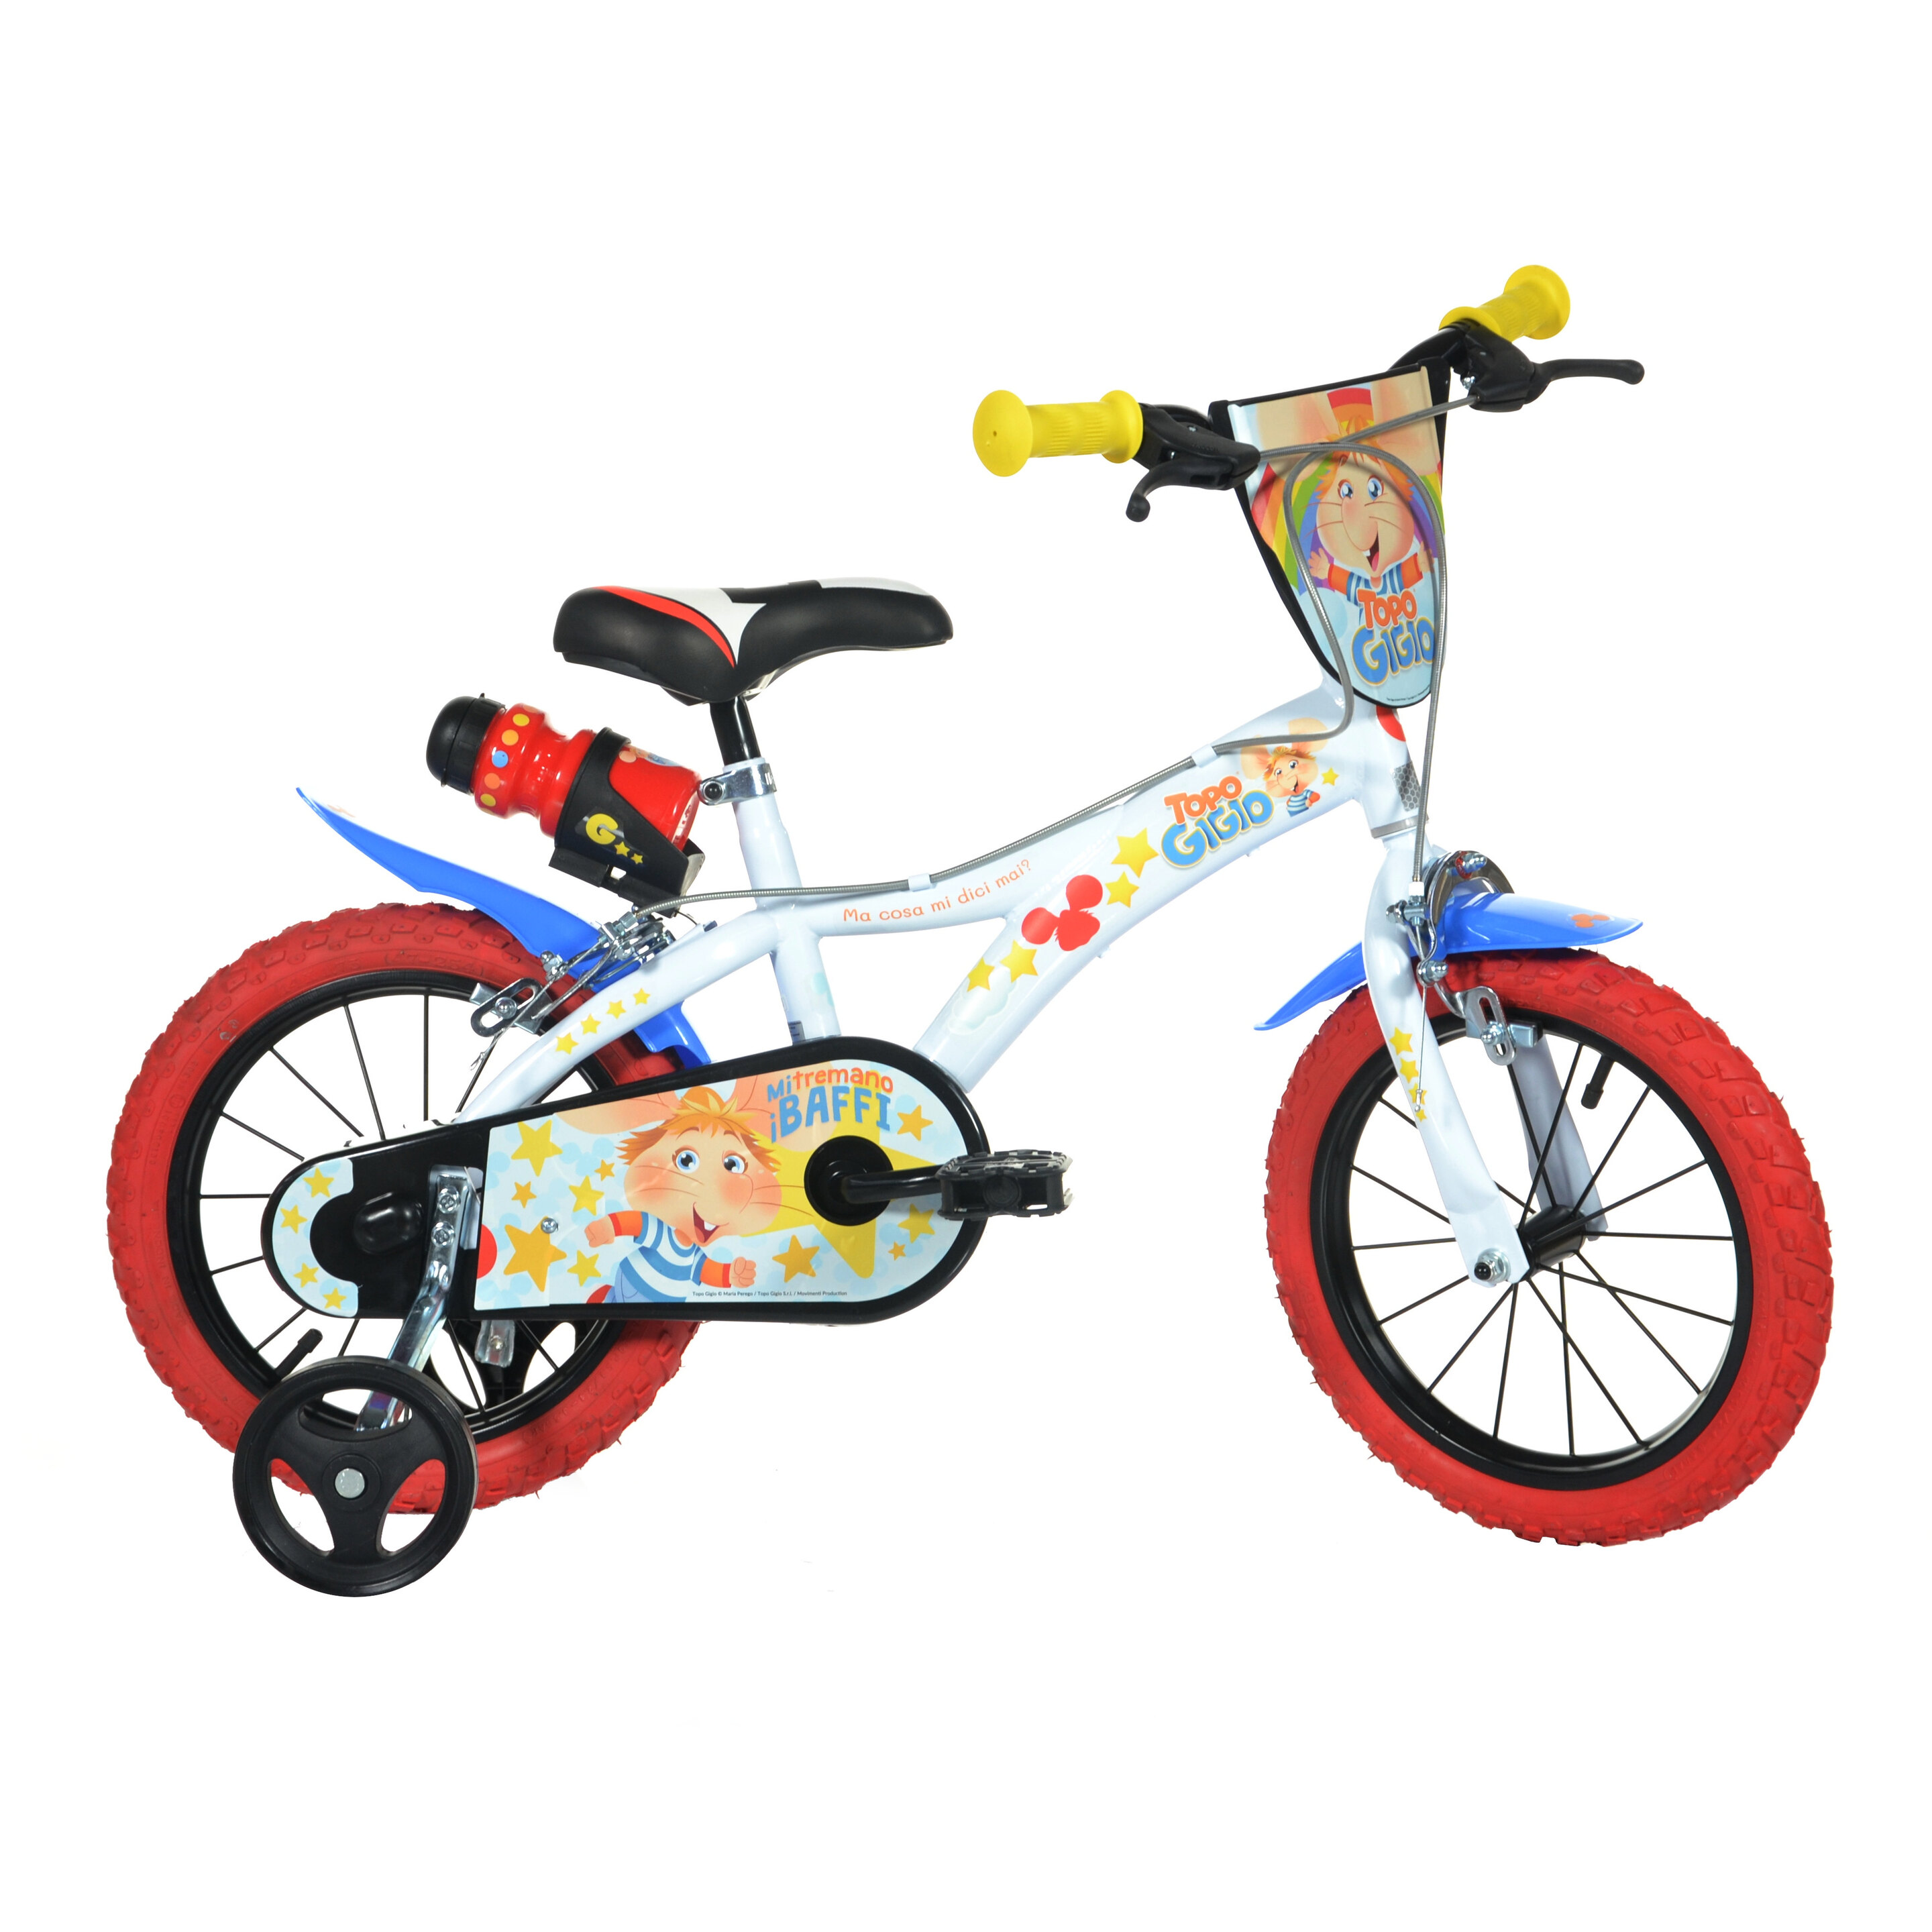 Bicicleta Infantil Topo Gigio 16 Pulgadas - multicolor - 